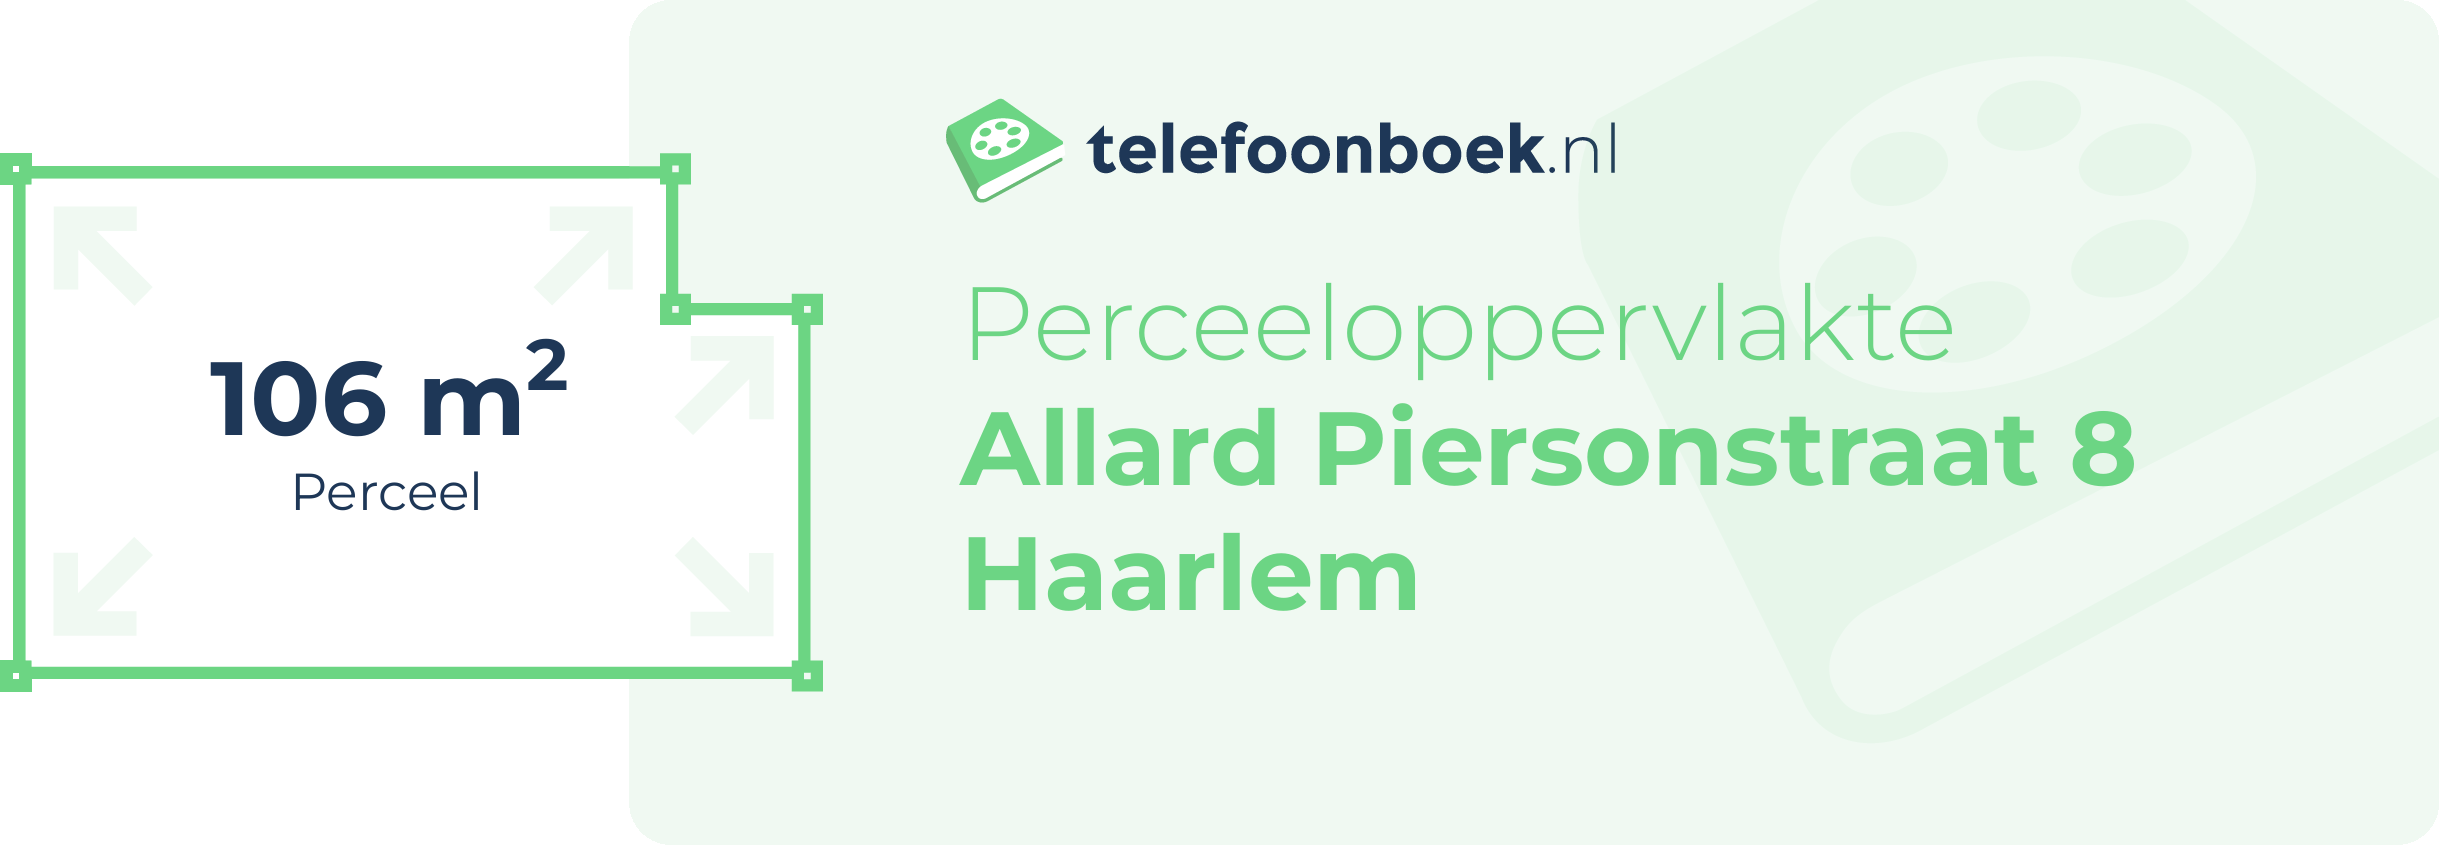 Perceeloppervlakte Allard Piersonstraat 8 Haarlem